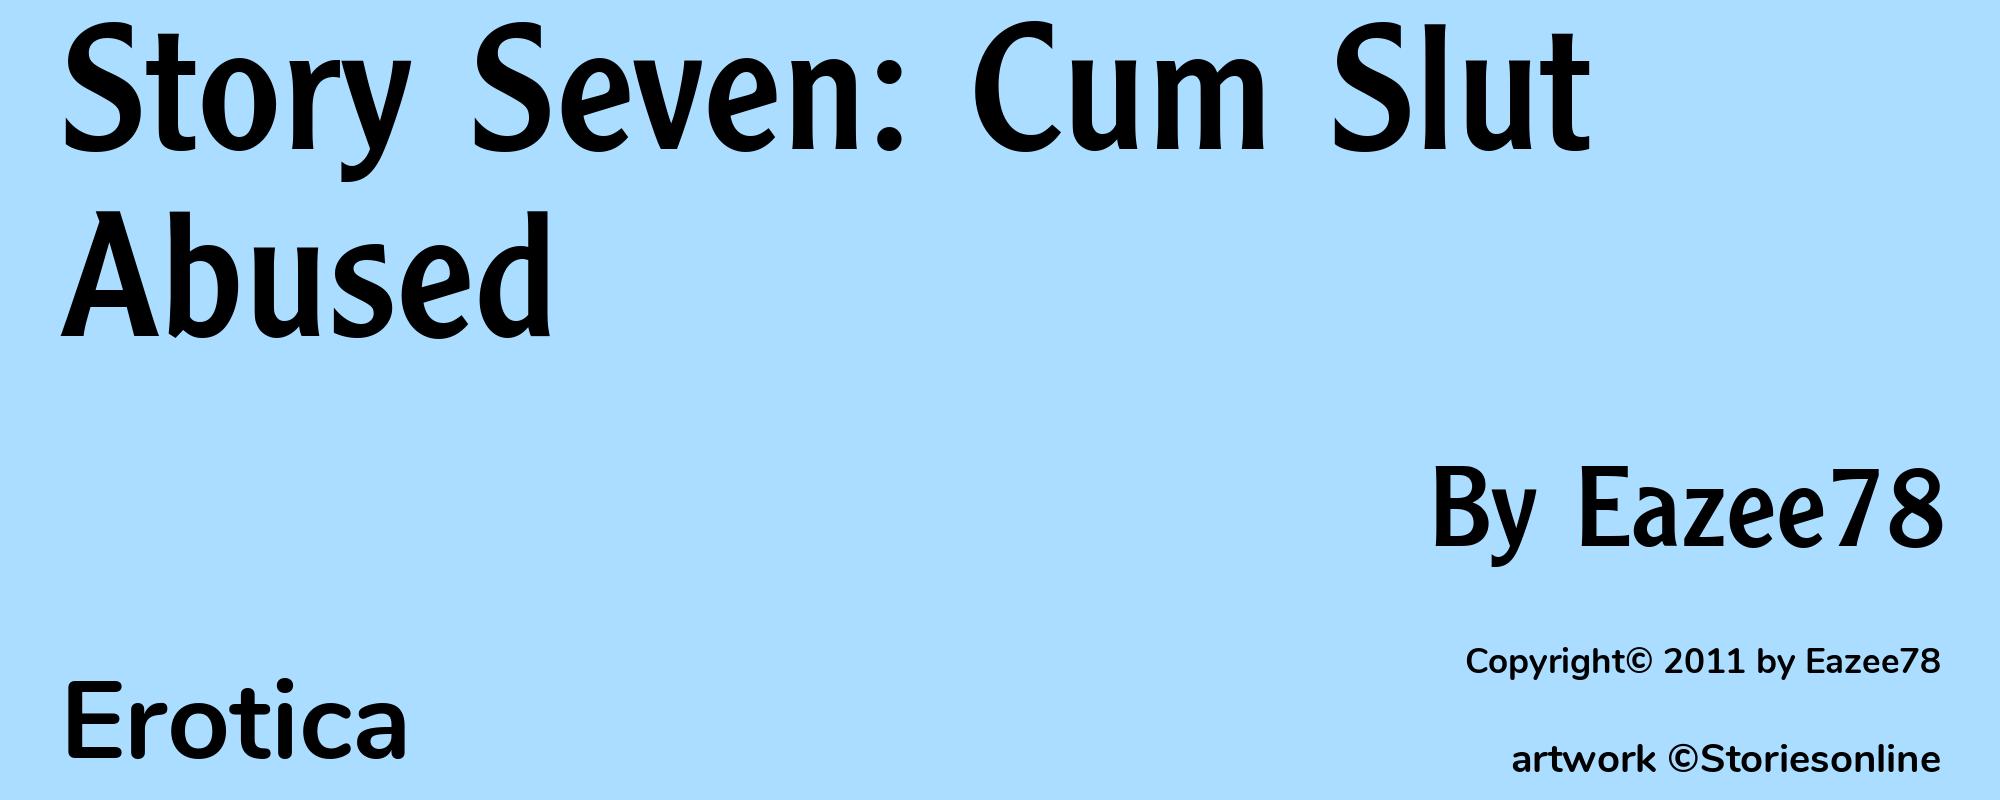 Story Seven: Cum Slut Abused - Cover